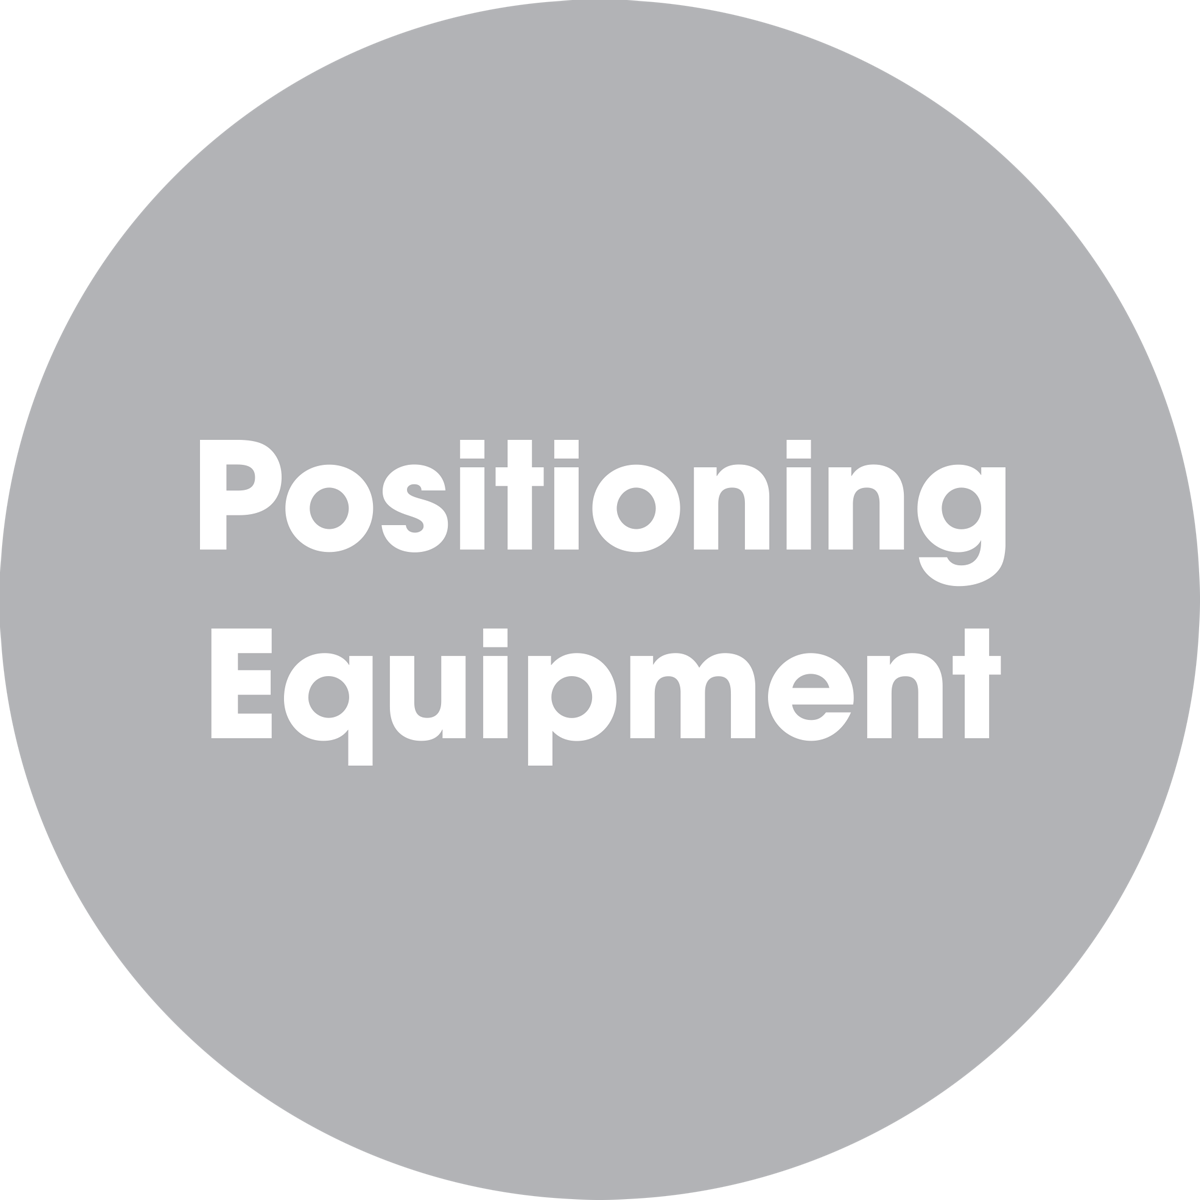 Positioning Equipment